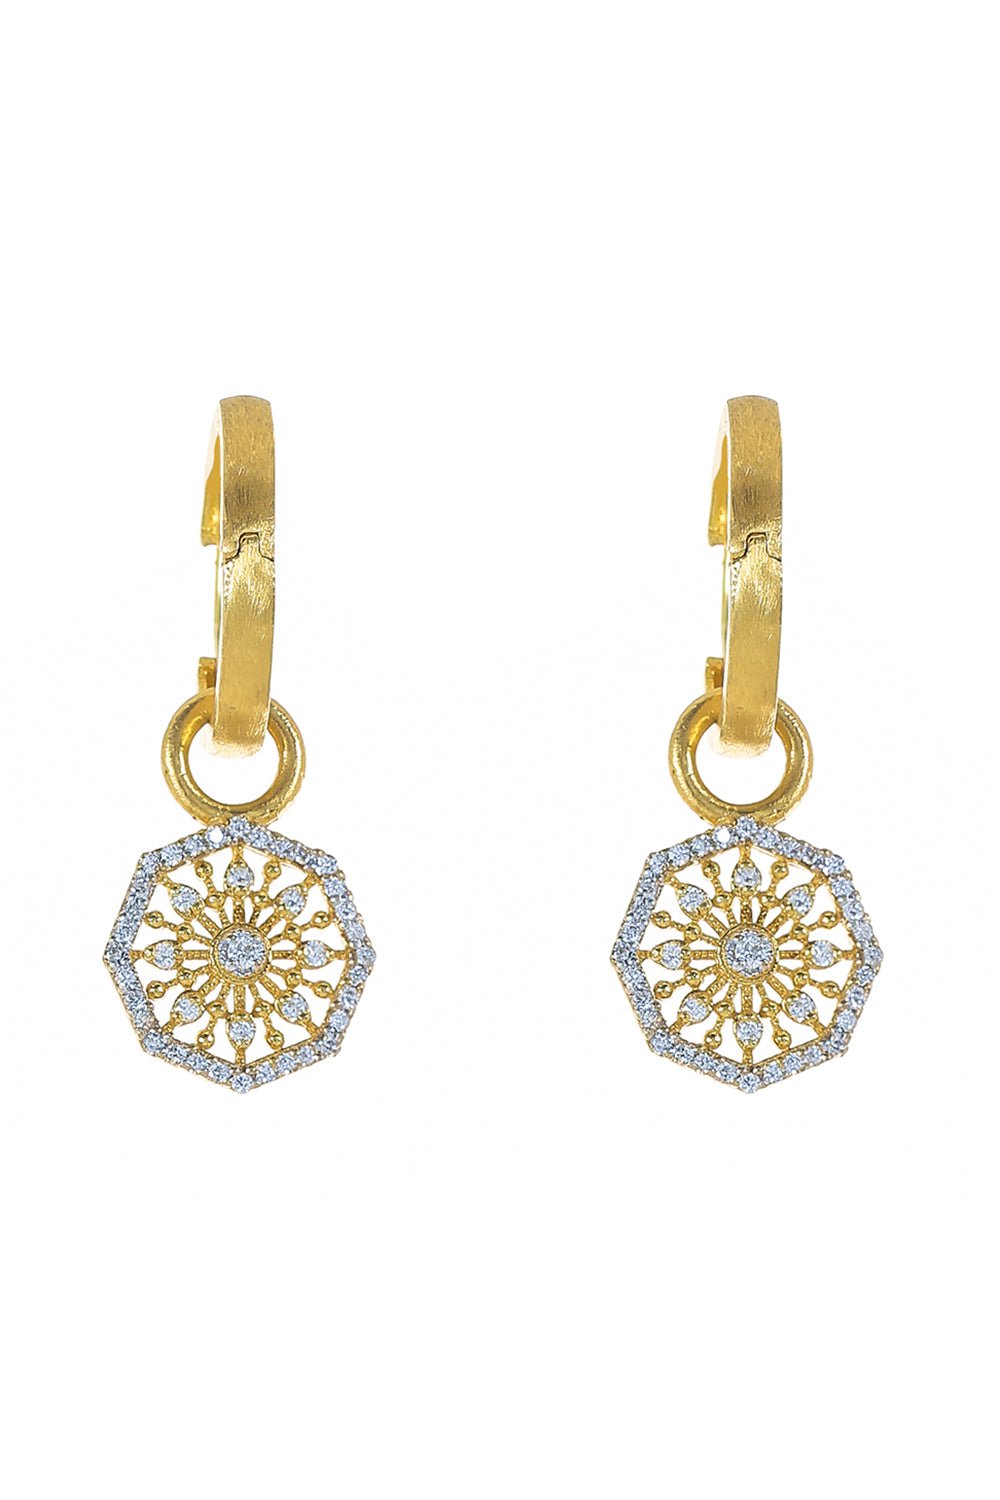 TANYA FARAH-Modern Etruscan Diamond Medallion Earrings-YELLOW GOLD